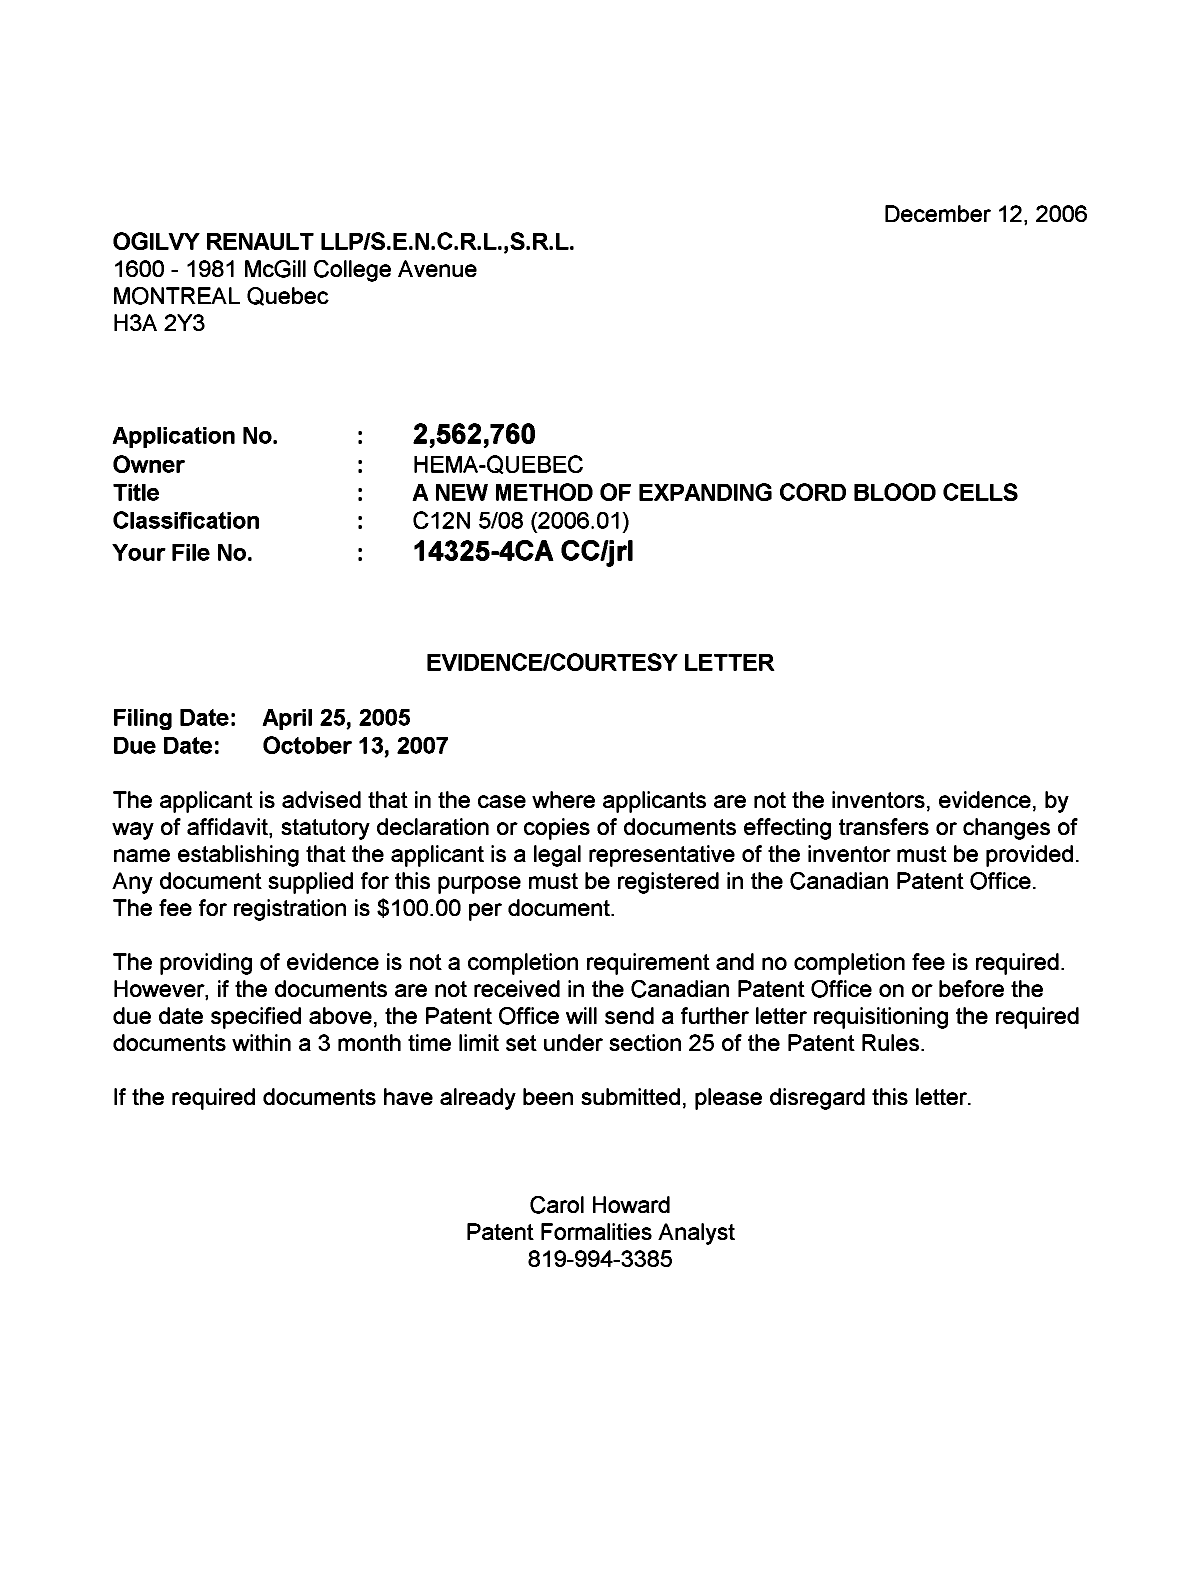 Canadian Patent Document 2562760. Correspondence 20051215. Image 1 of 1